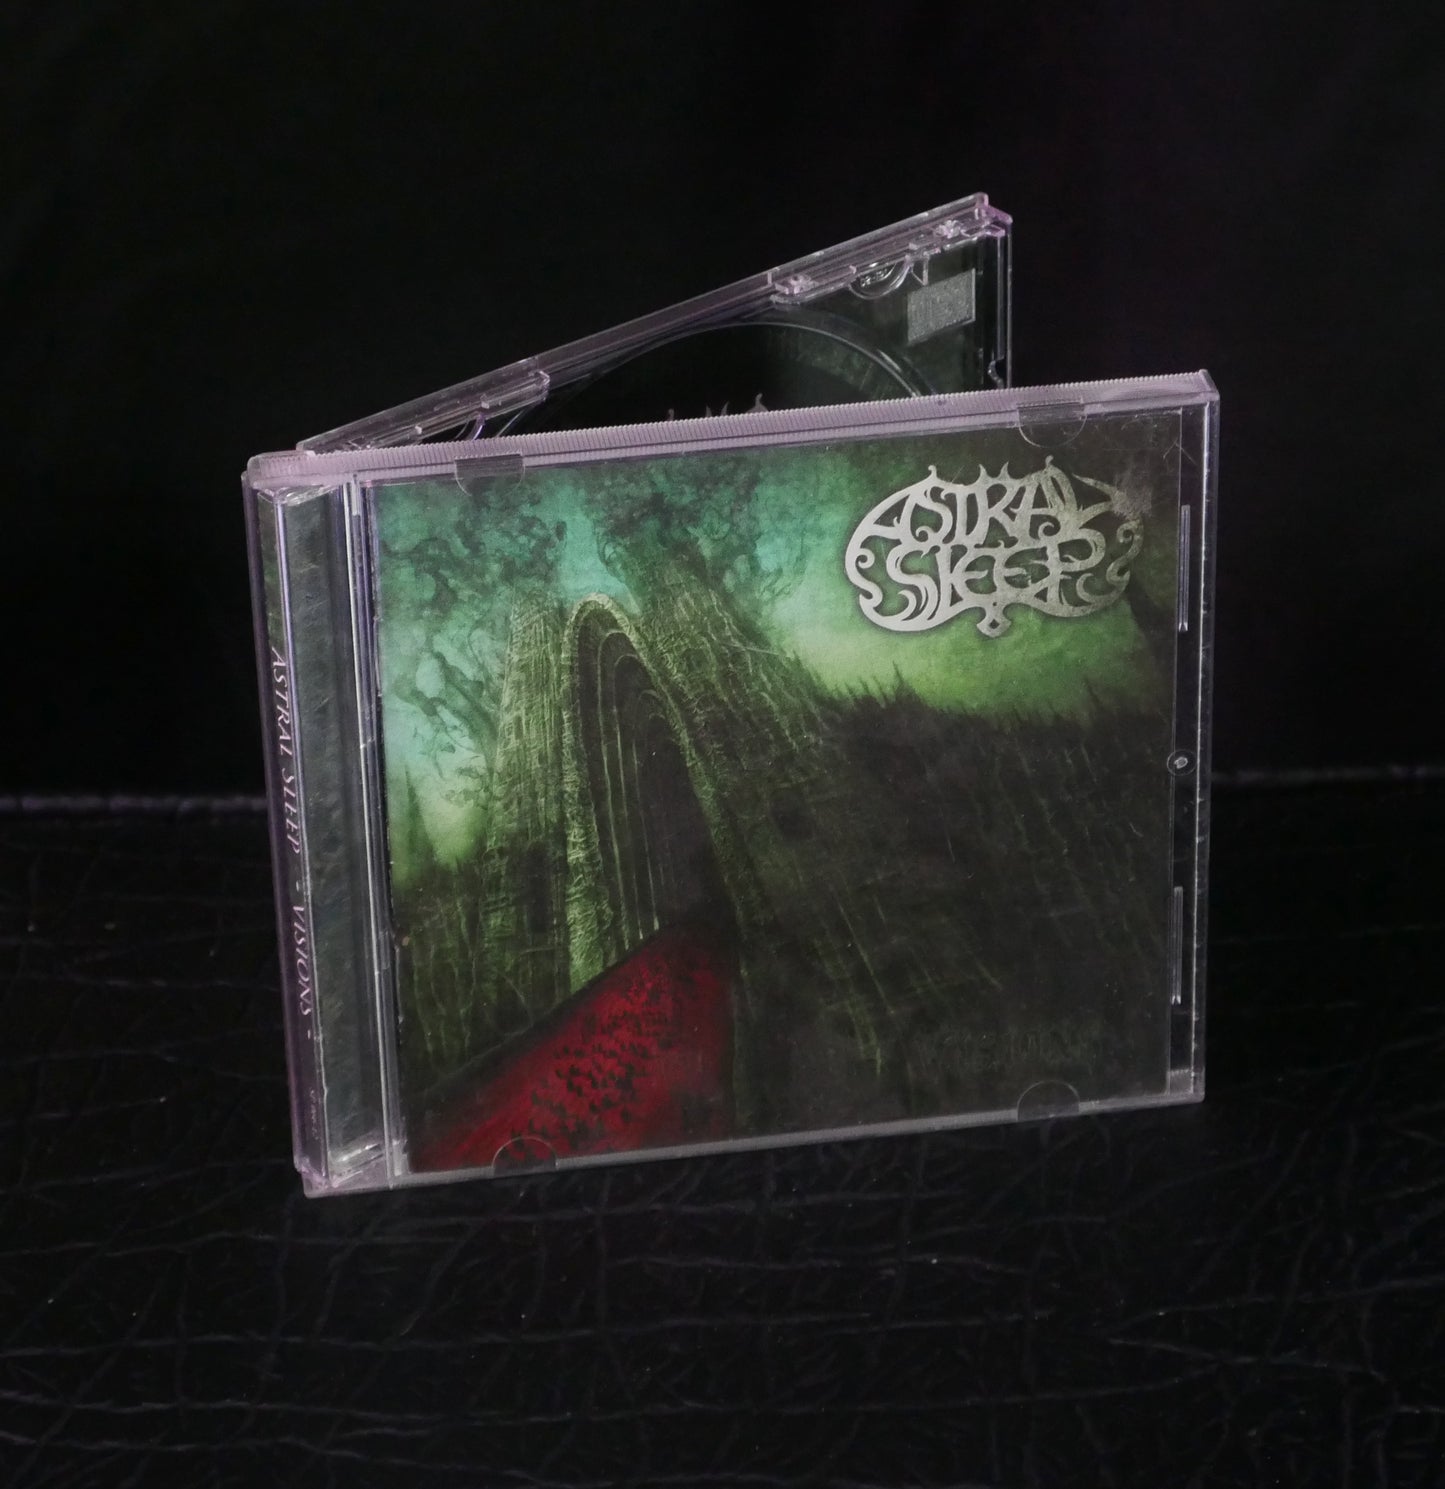 Astral Sleep: Visions CD